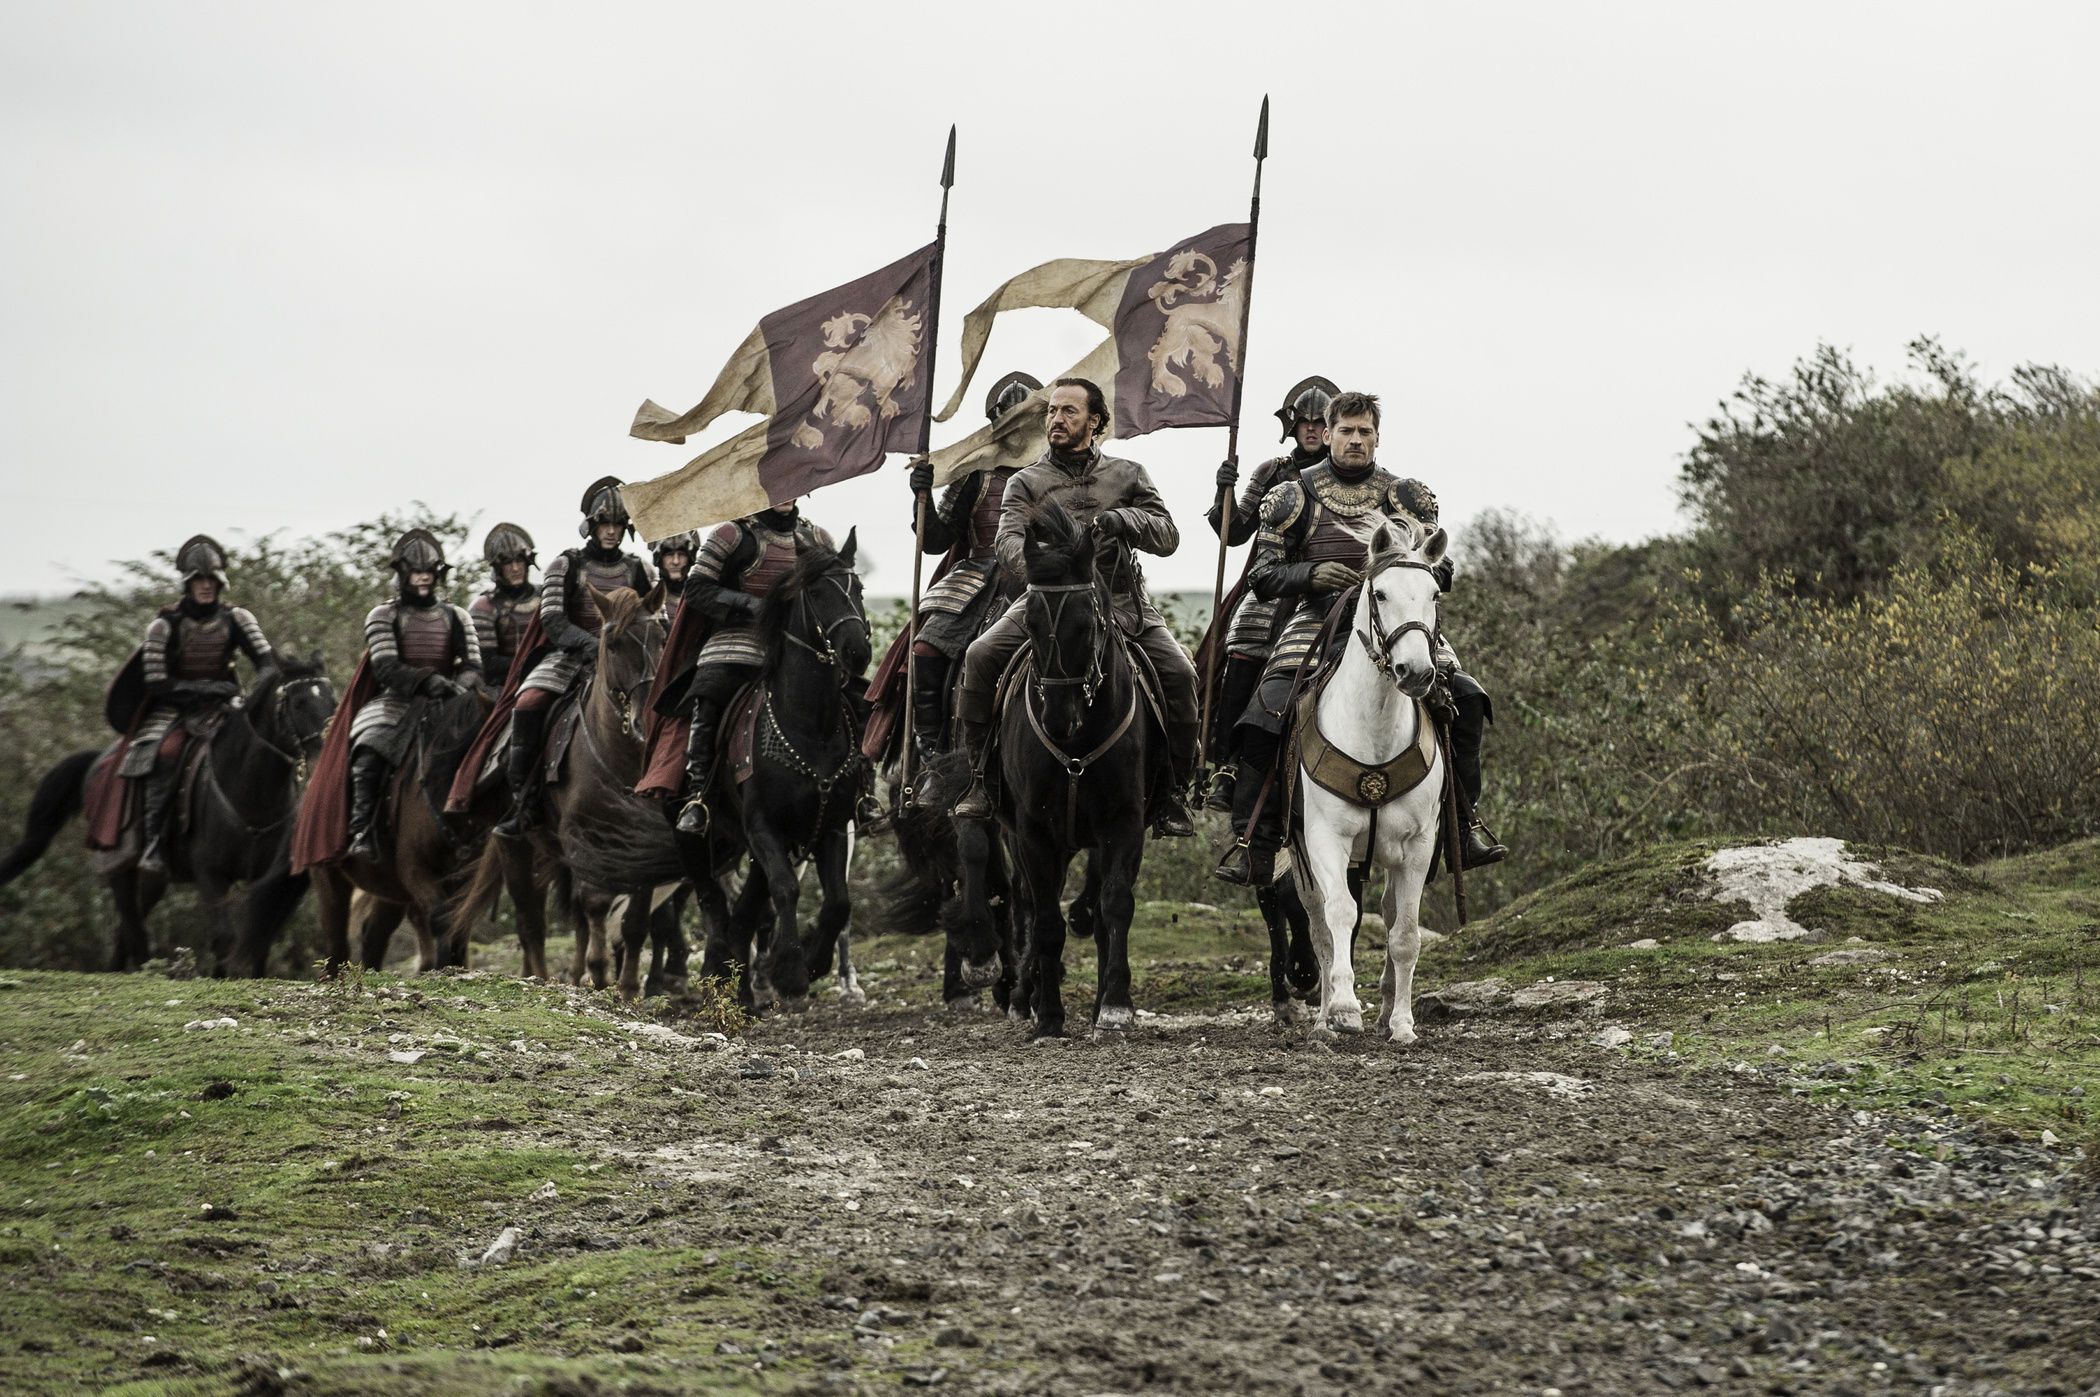 Game of Thrones season 6 finale - Bronn and Jaime